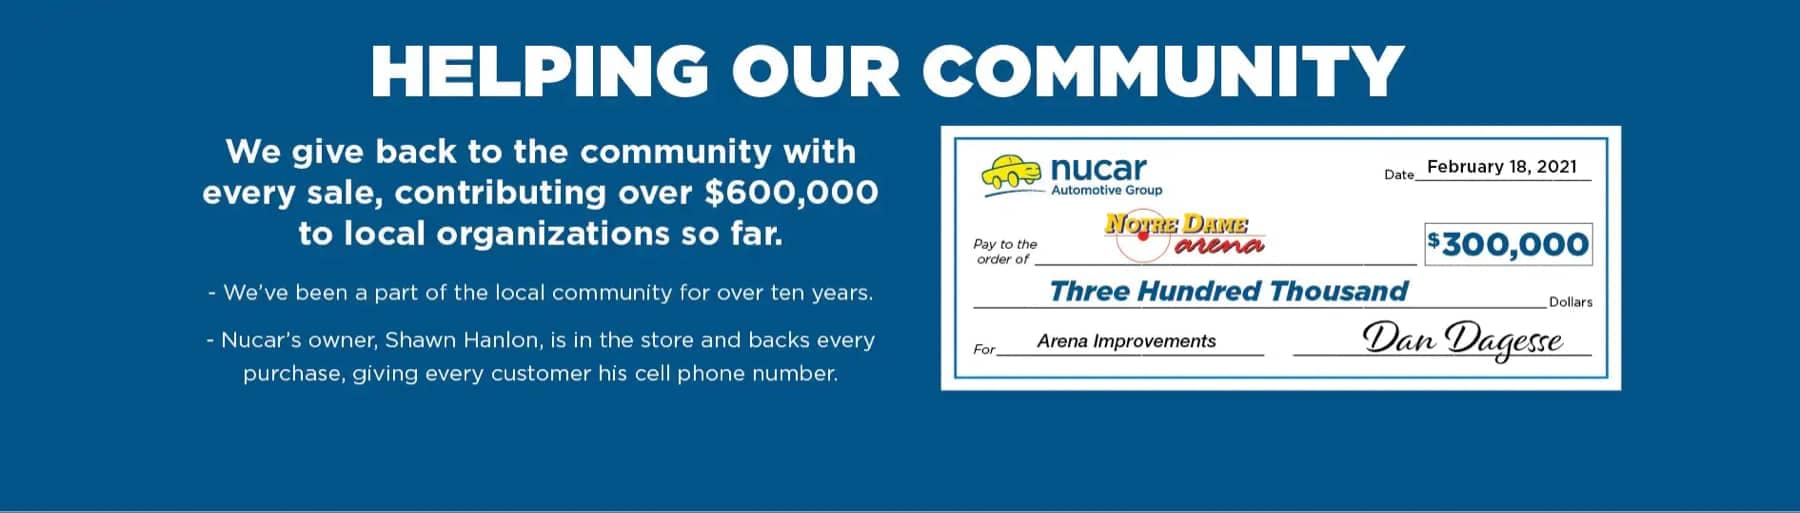 Nucar Why Buy - Community Image